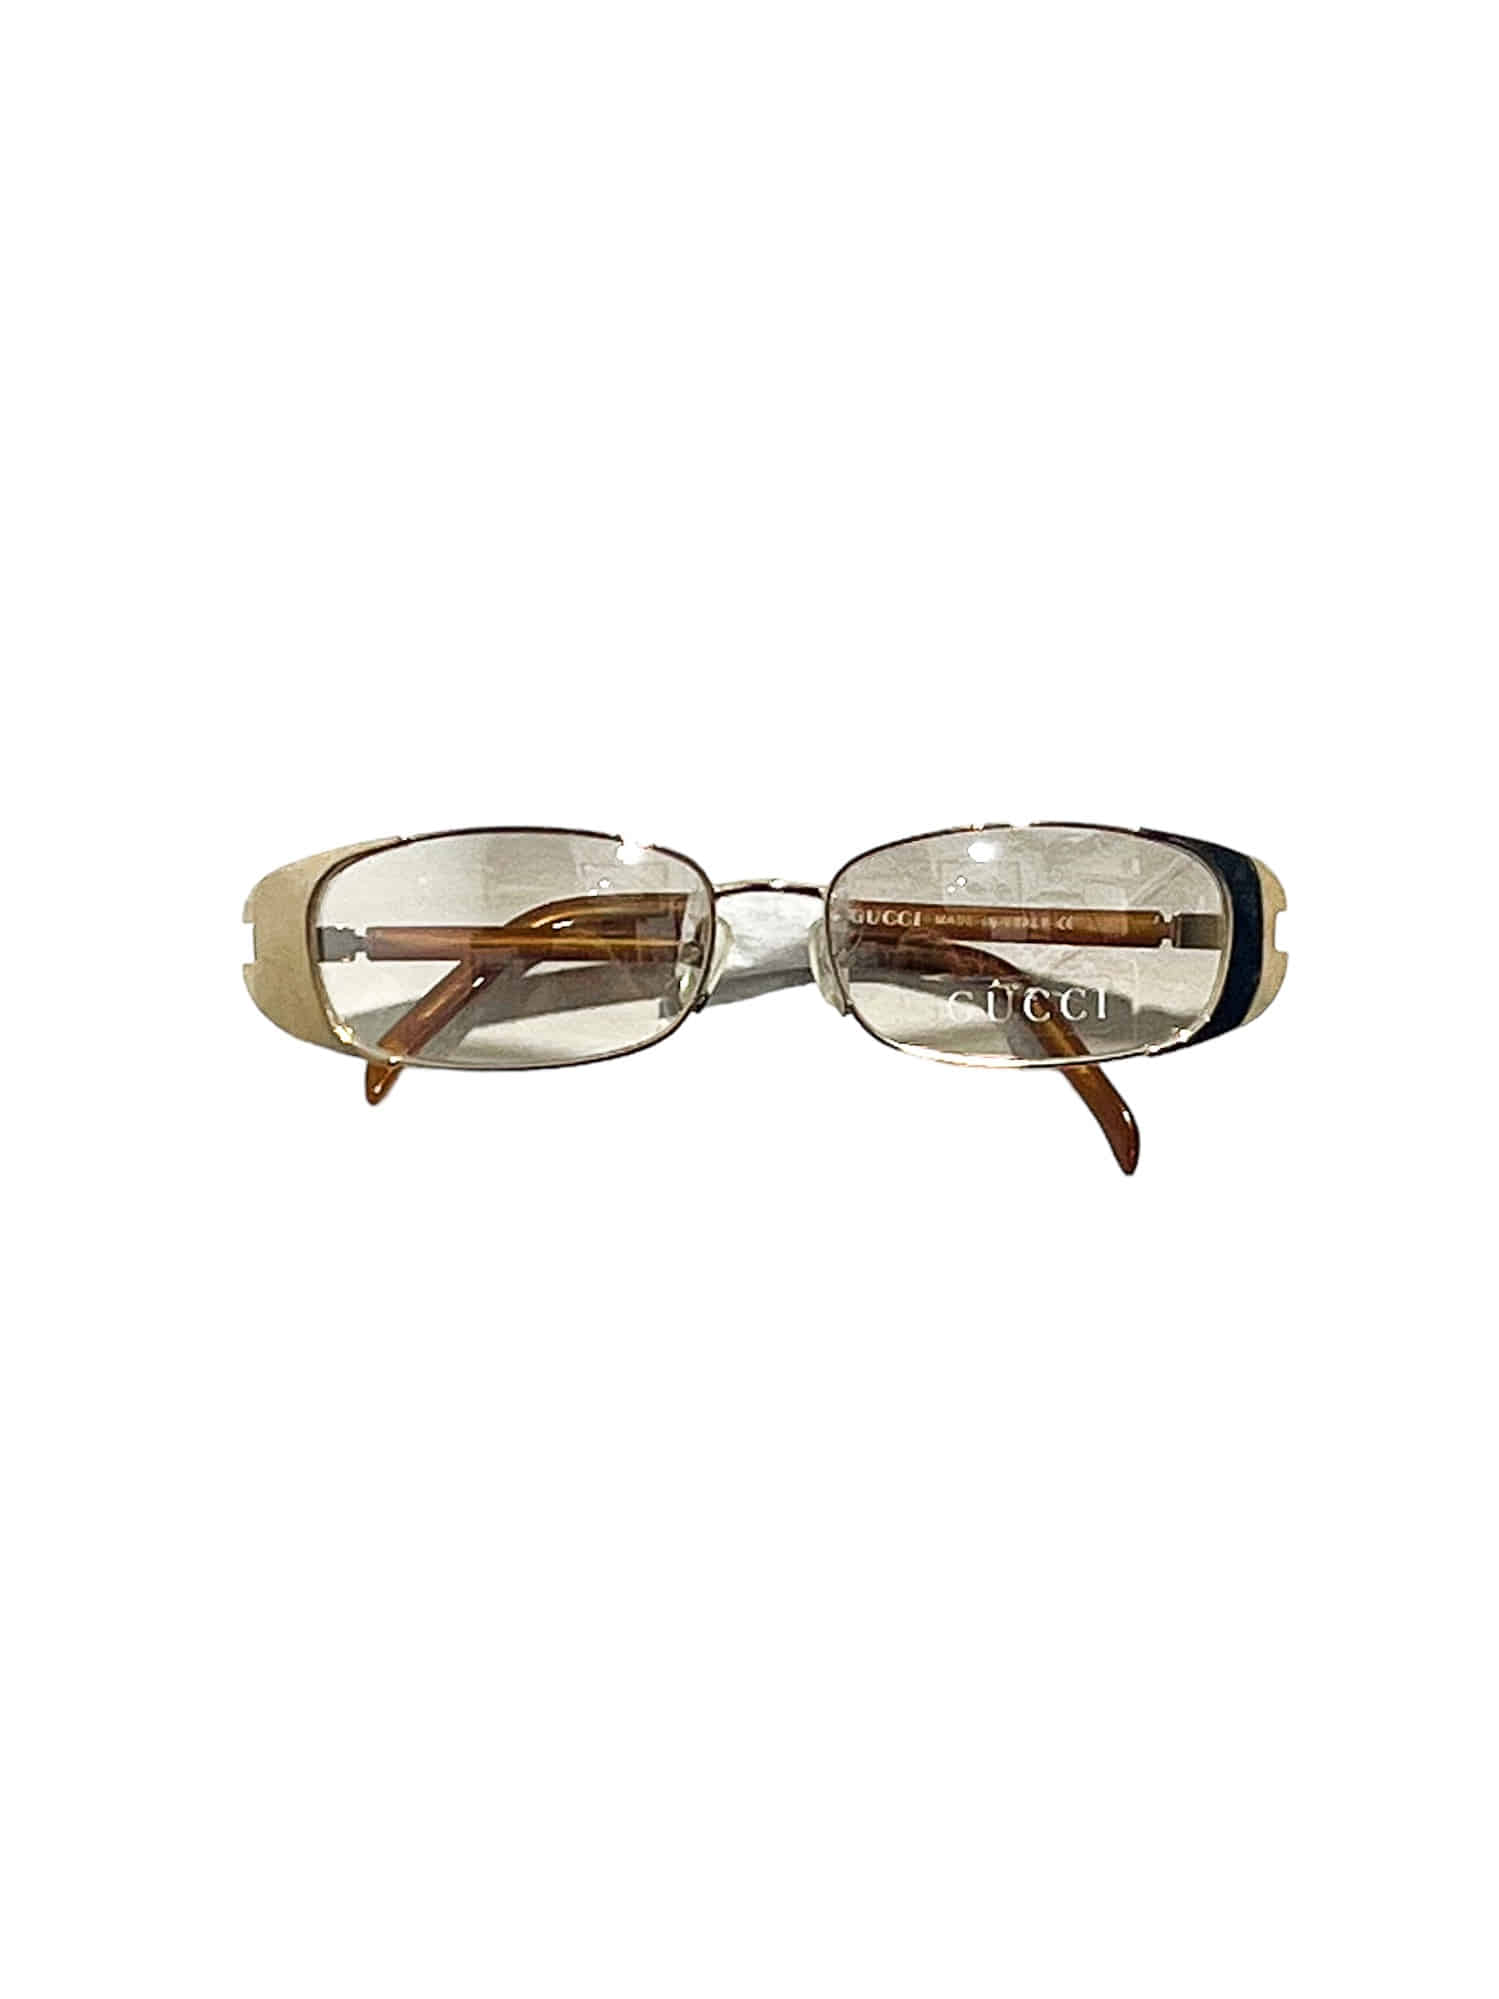 Old Gucci Vintage Sunglasses (Brown Lens)